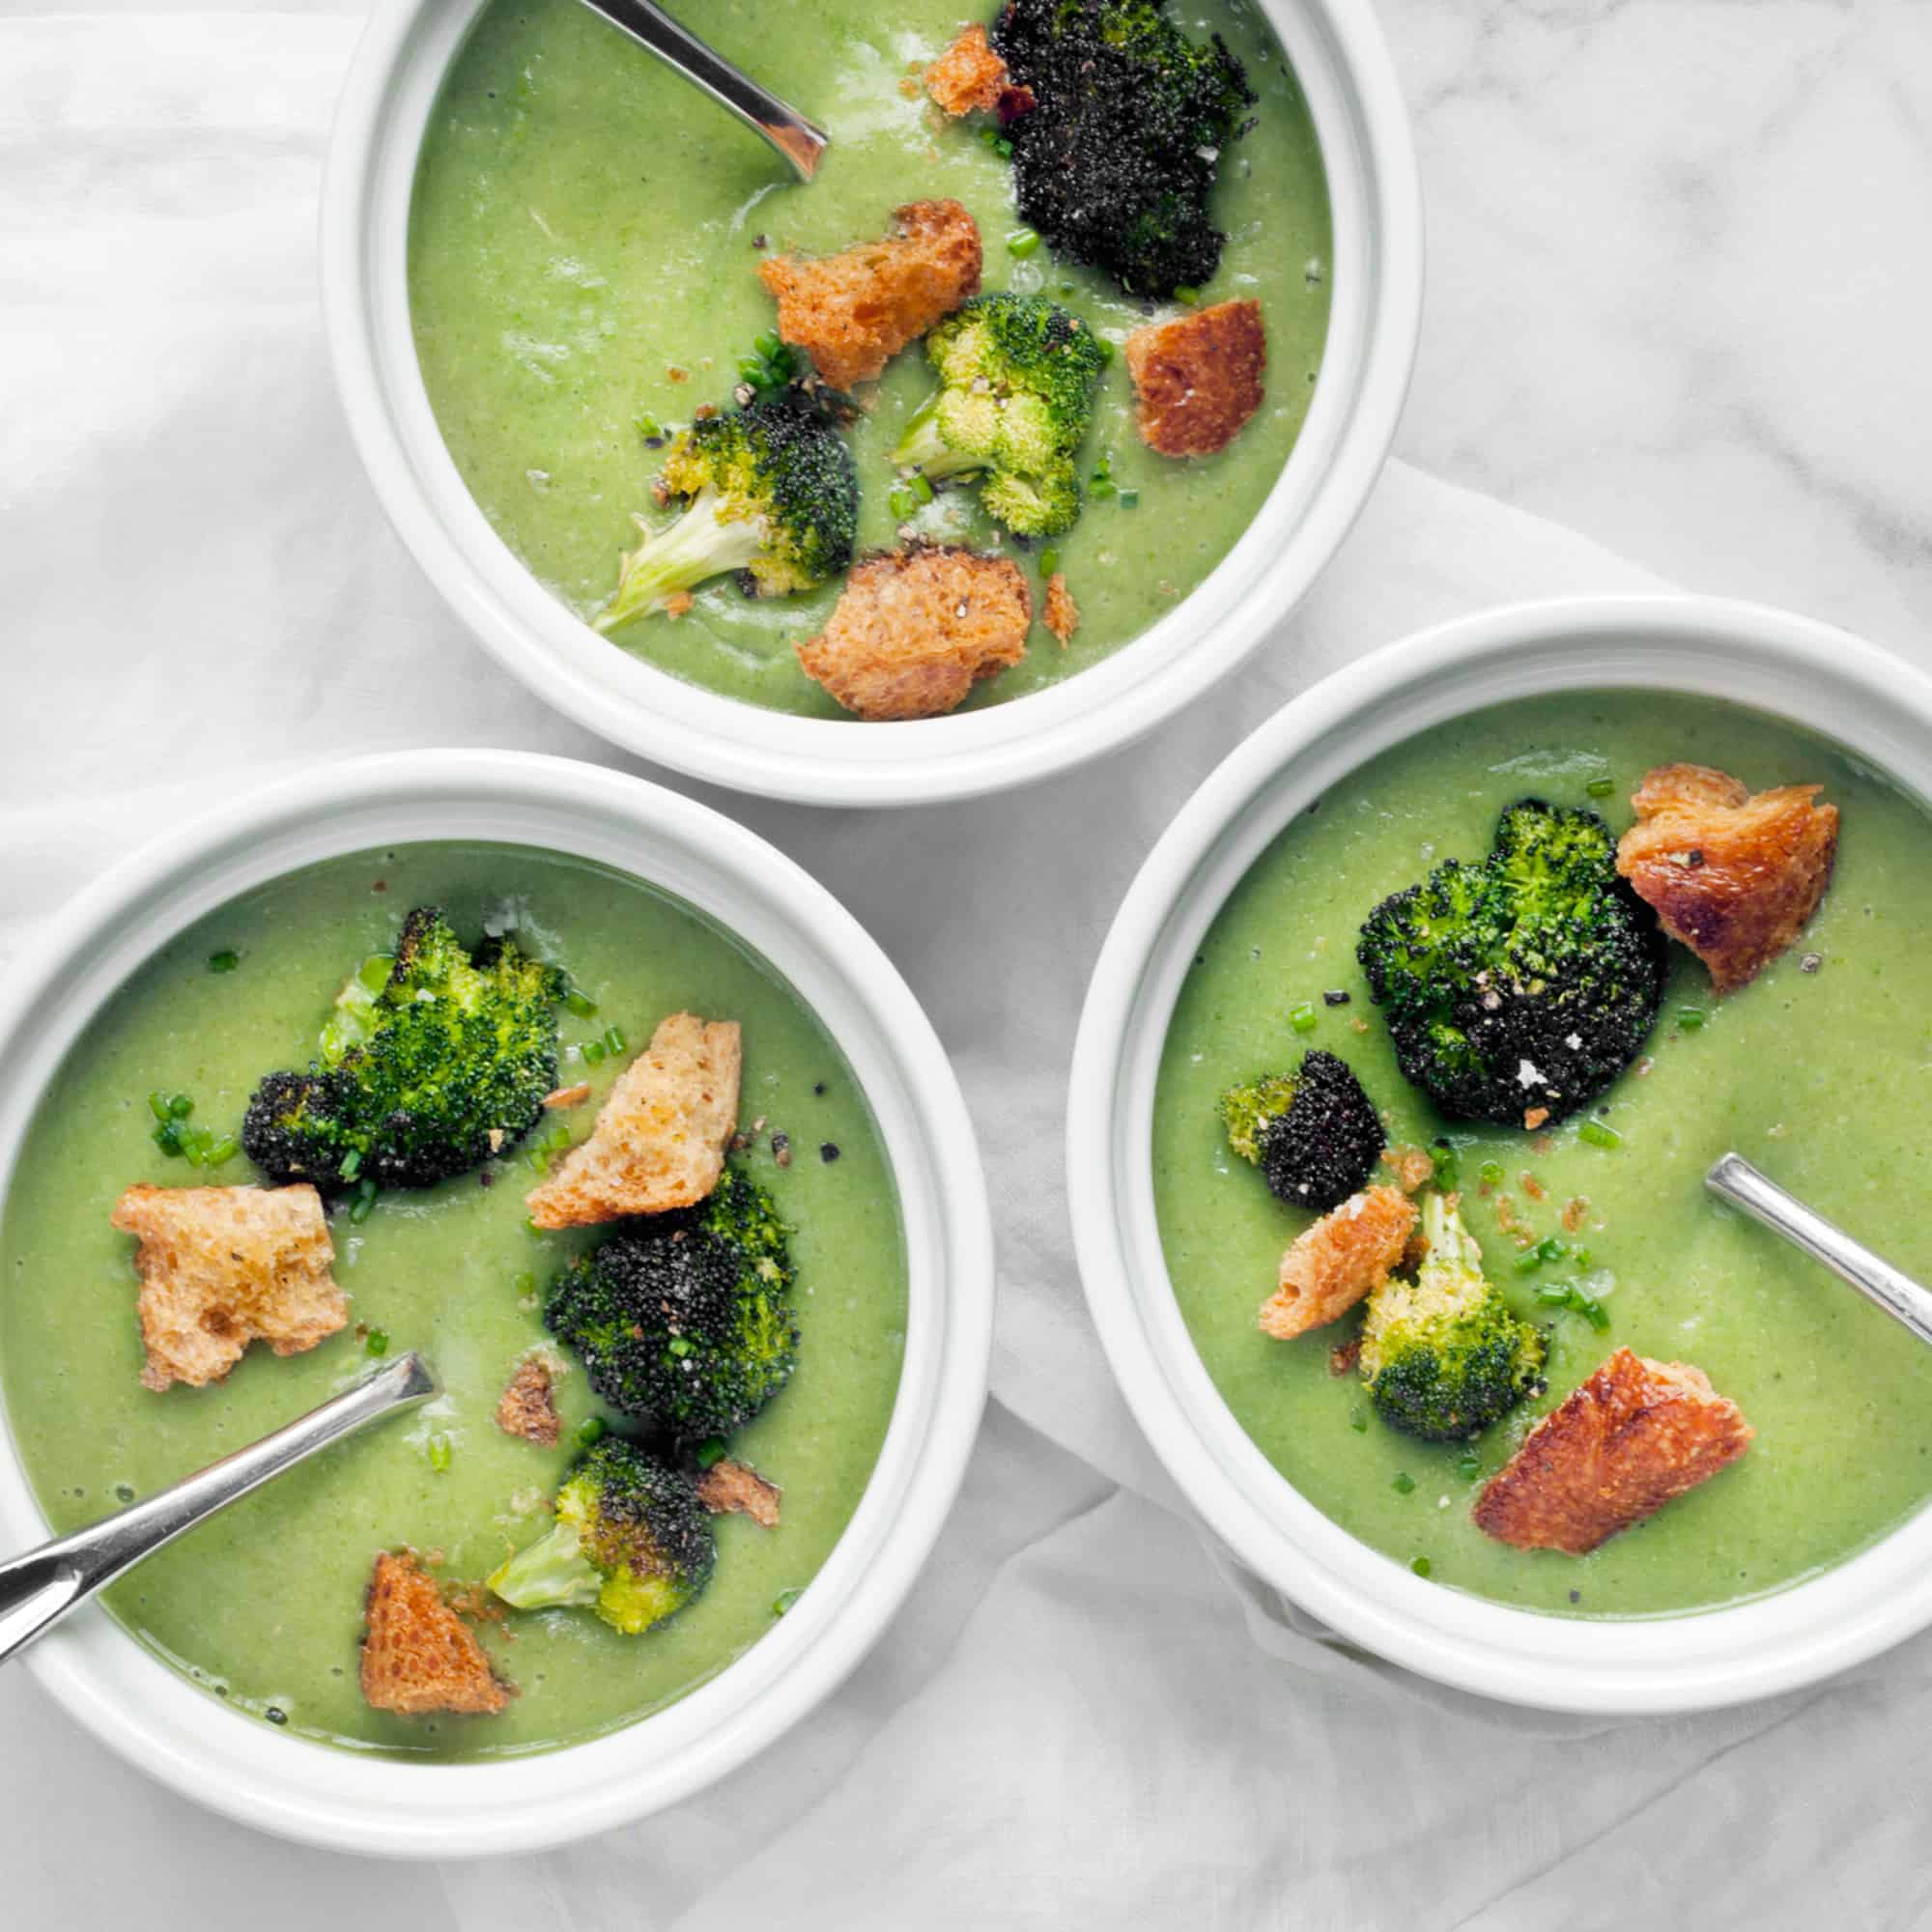 Broccoli Spinach Soup